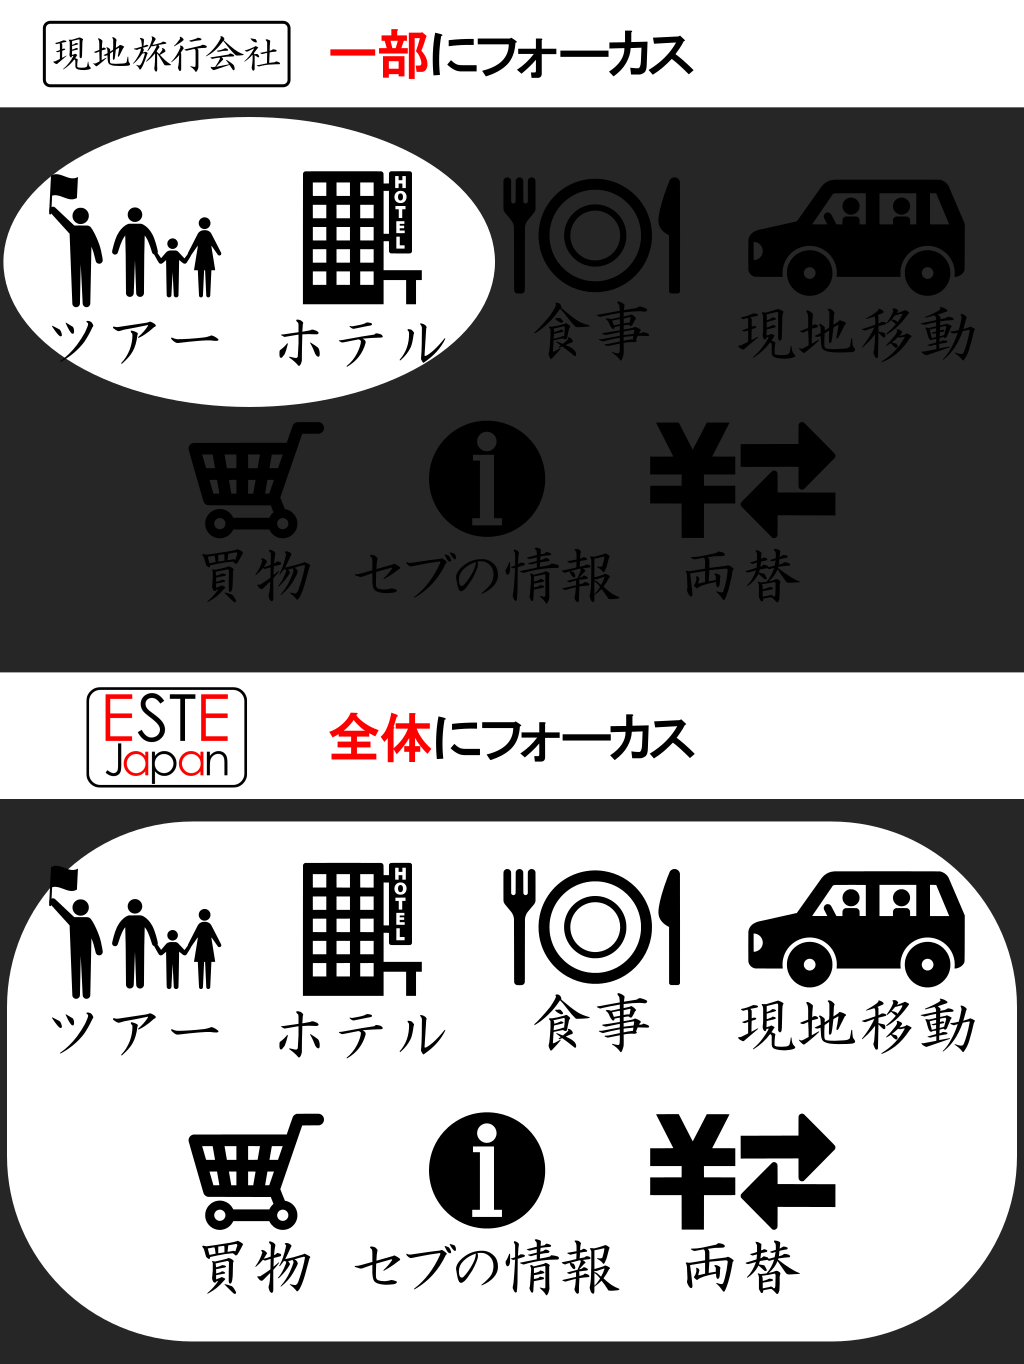 ESTE Japanと現地旅行会社の違いの分かる画像